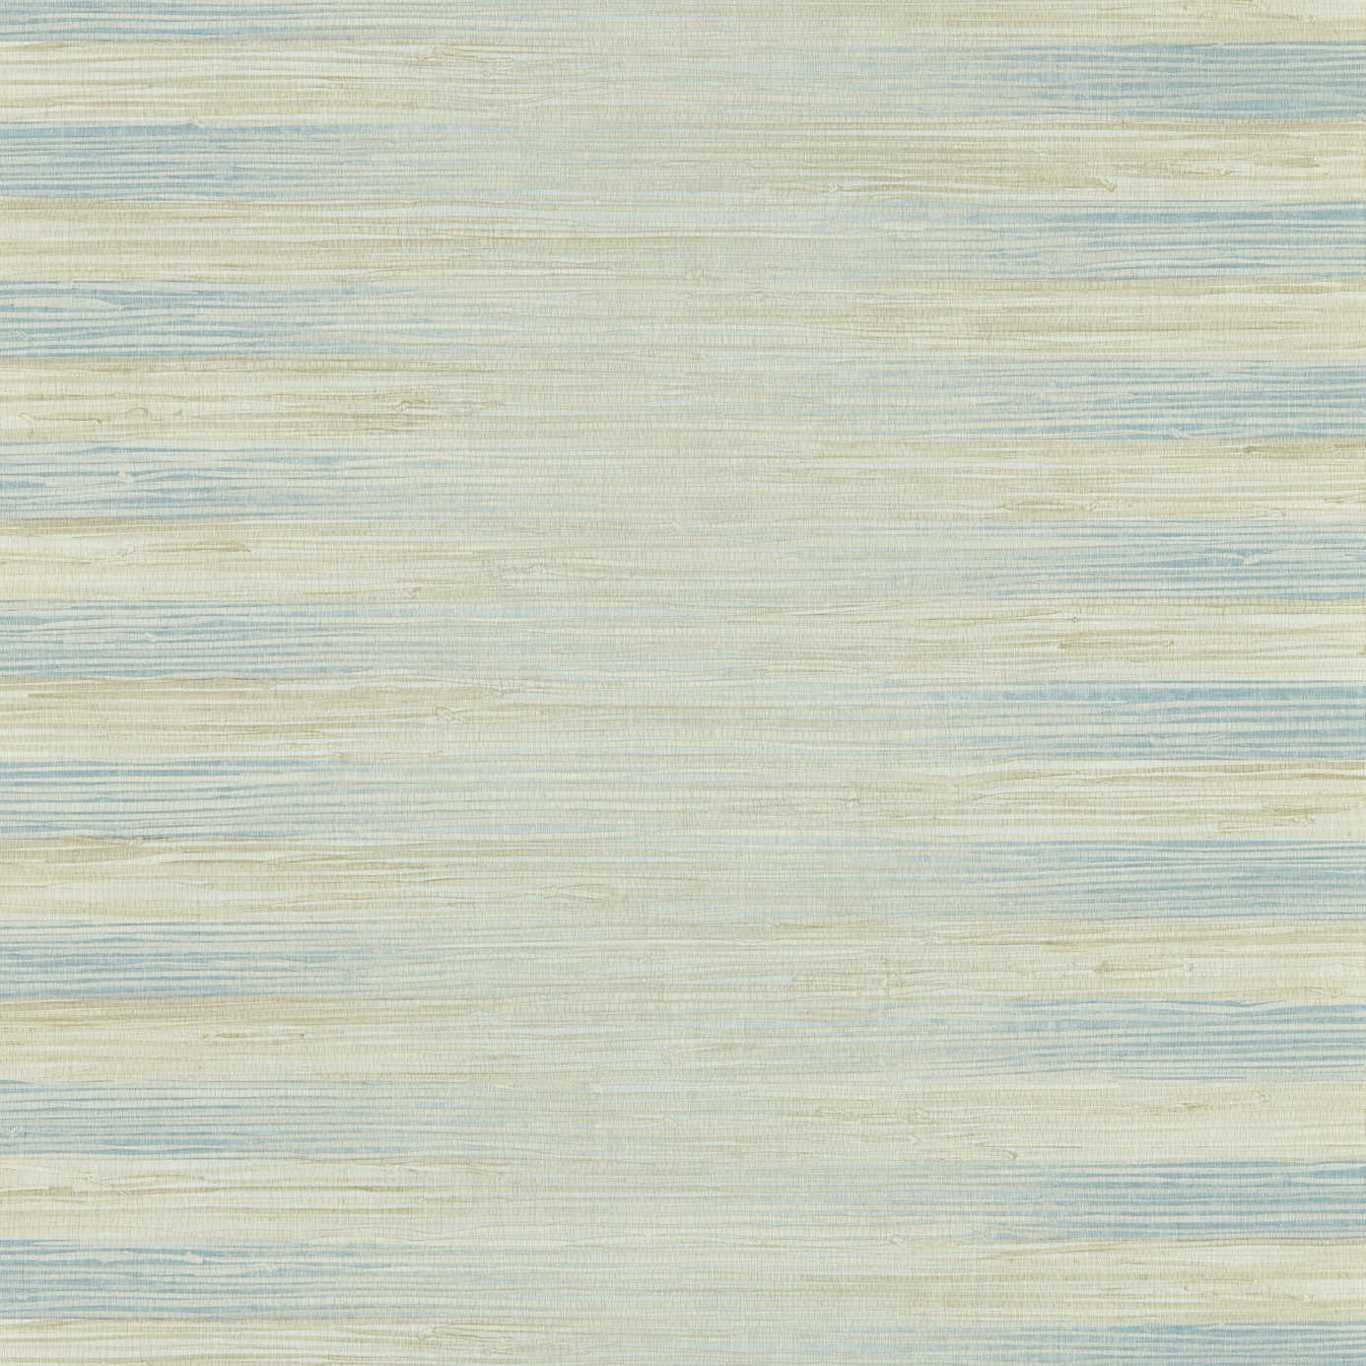 Kensington Grasscloth Indigo Wash Wallpaper by ZOF